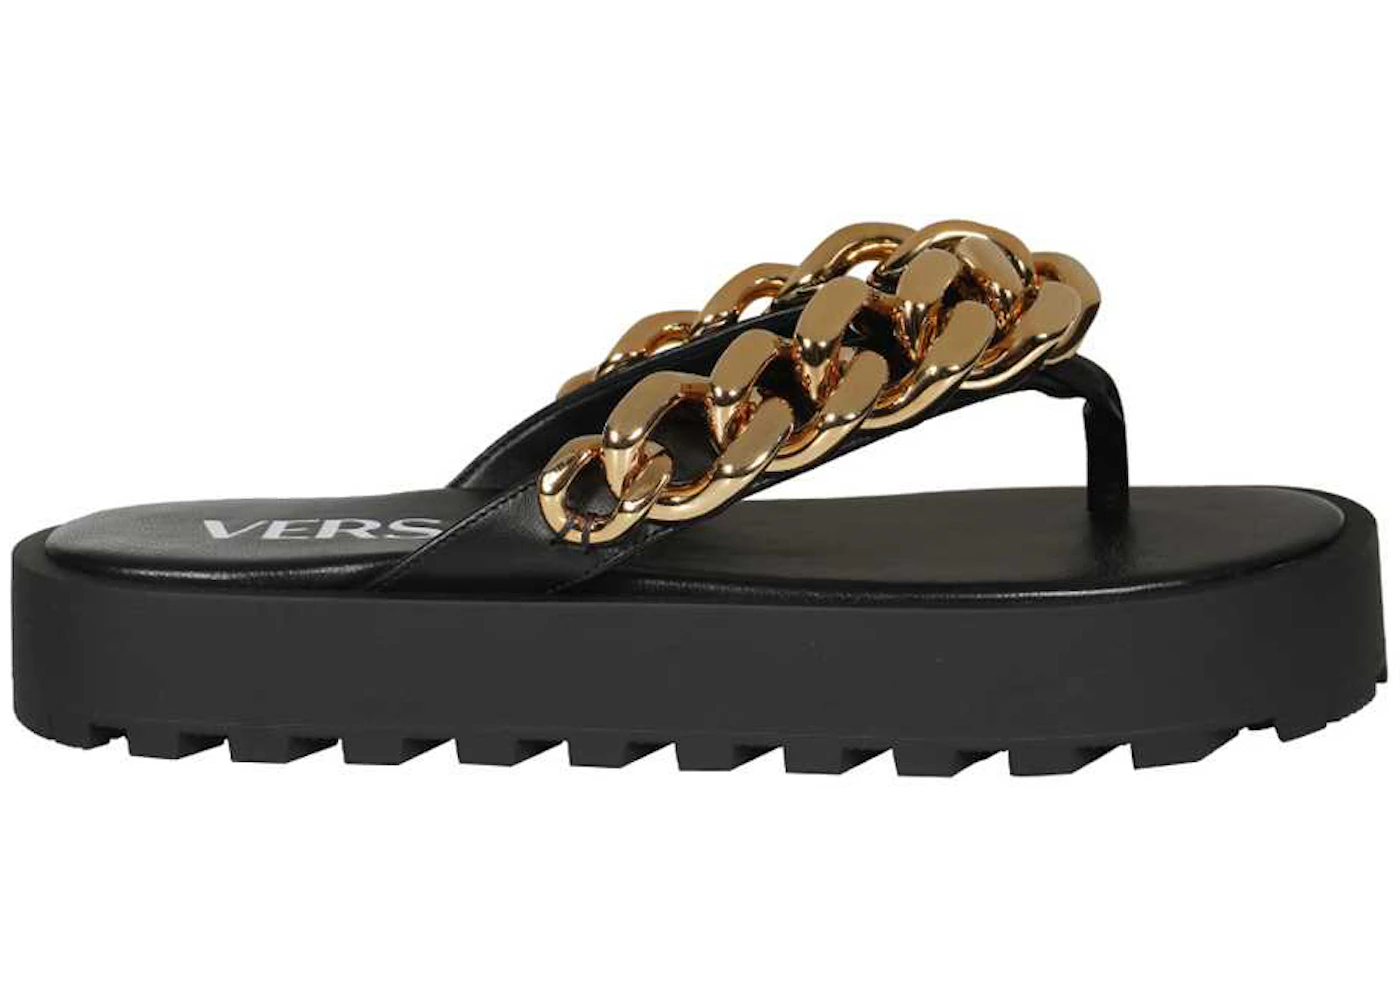 Versace Chain Leather Sandal Black (Women's) - 1003336-DVT2P-1B00V - US